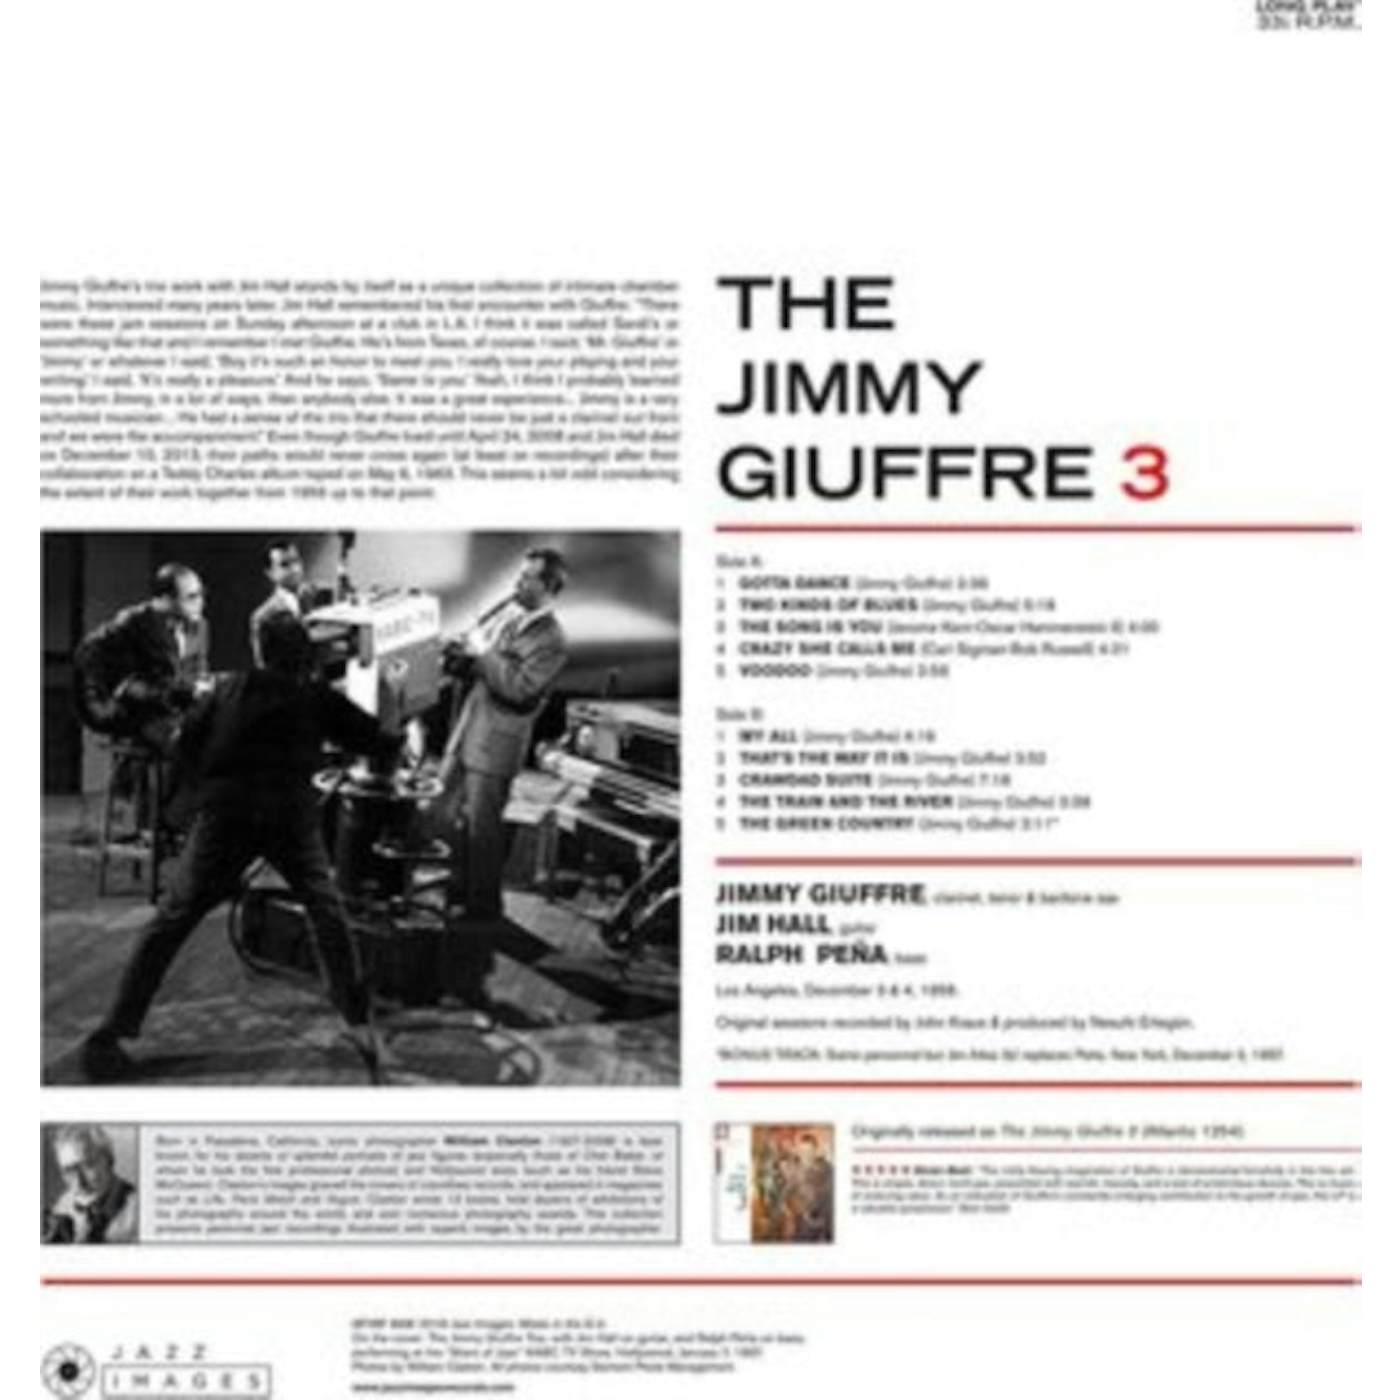 The Jimmy Giuffre 3 LP - The Jimmy Giuffre 3 (Vinyl)